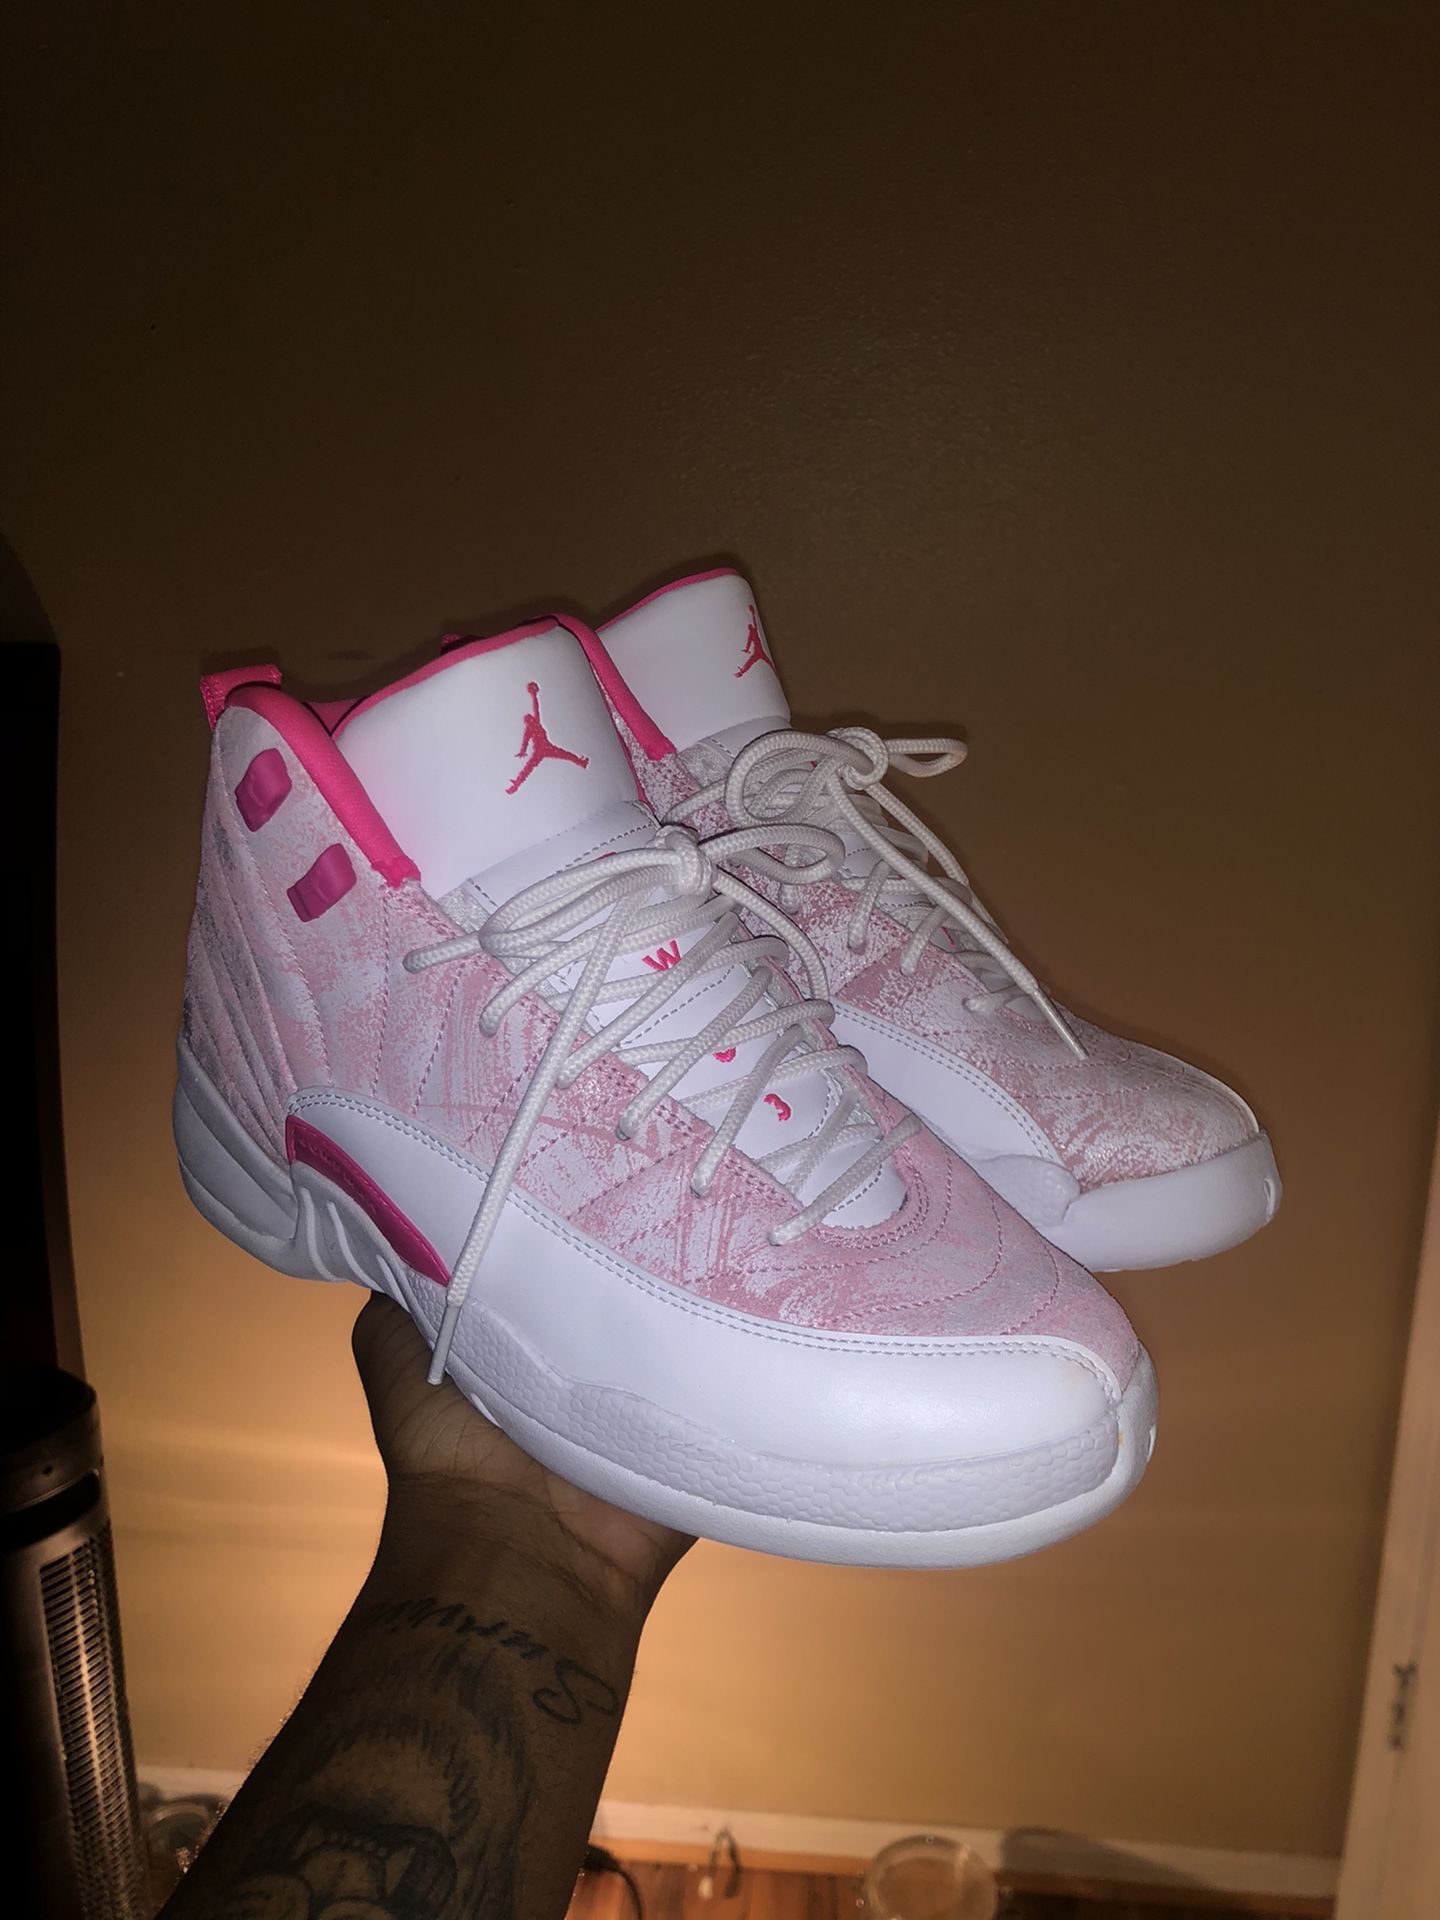 Jordan 12 Vivid Pink